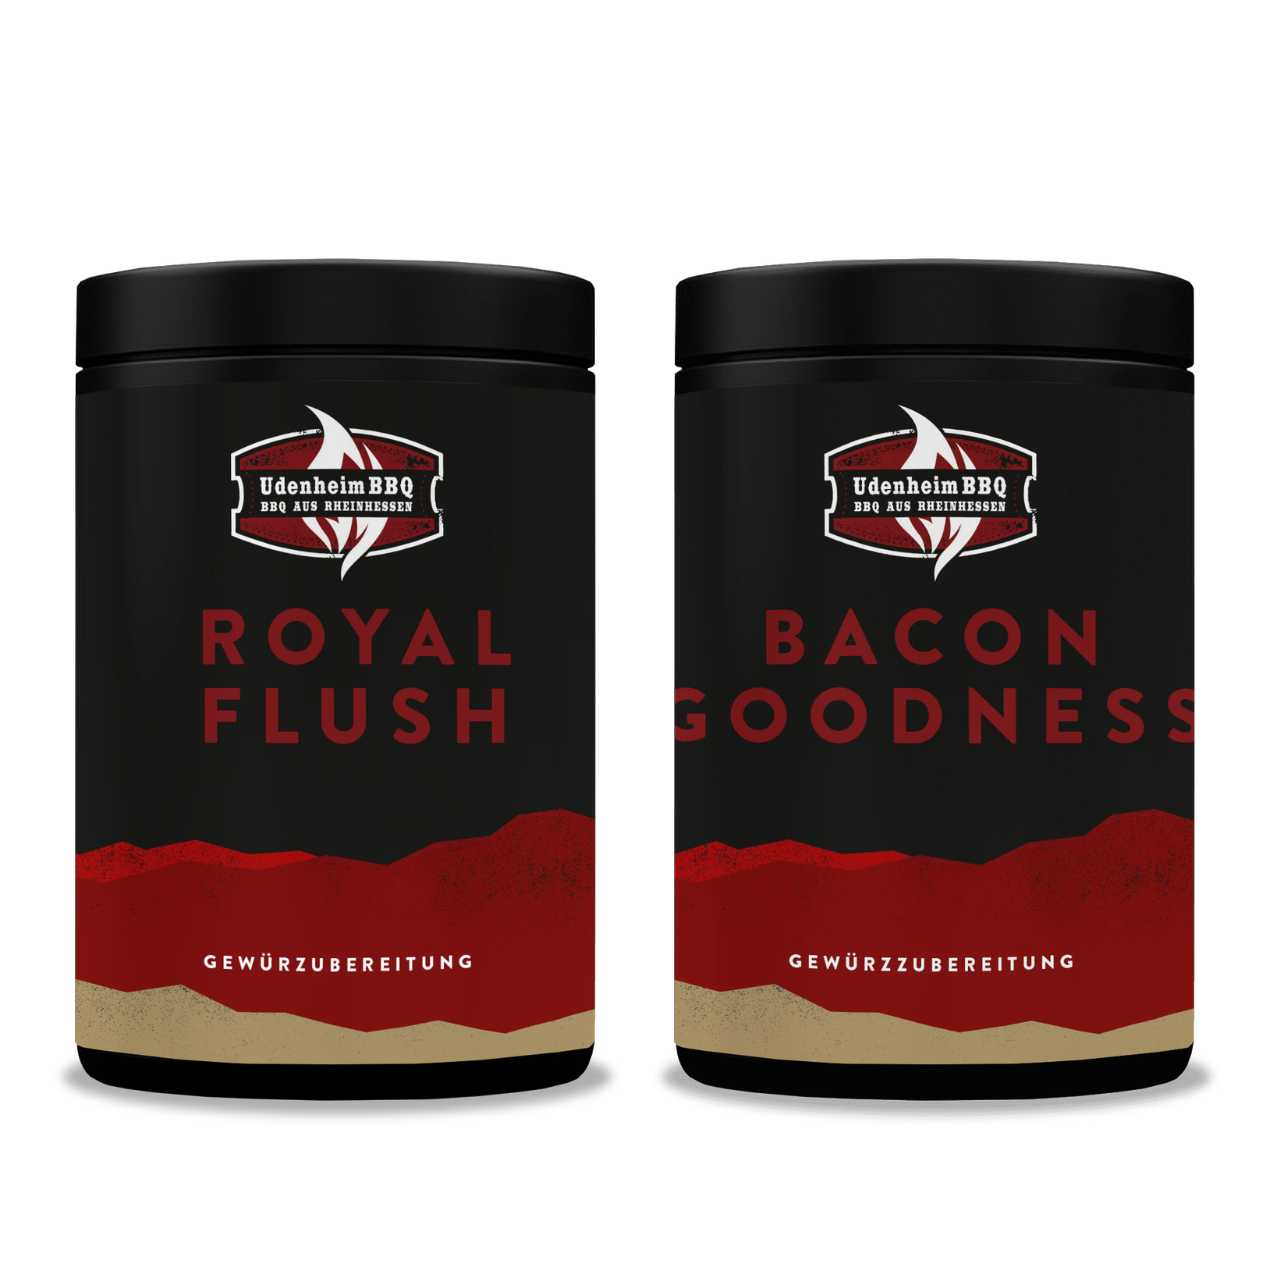 Udenheim BBQ - Großes Set, Royal Flush & Bacon Goodness, 350 g